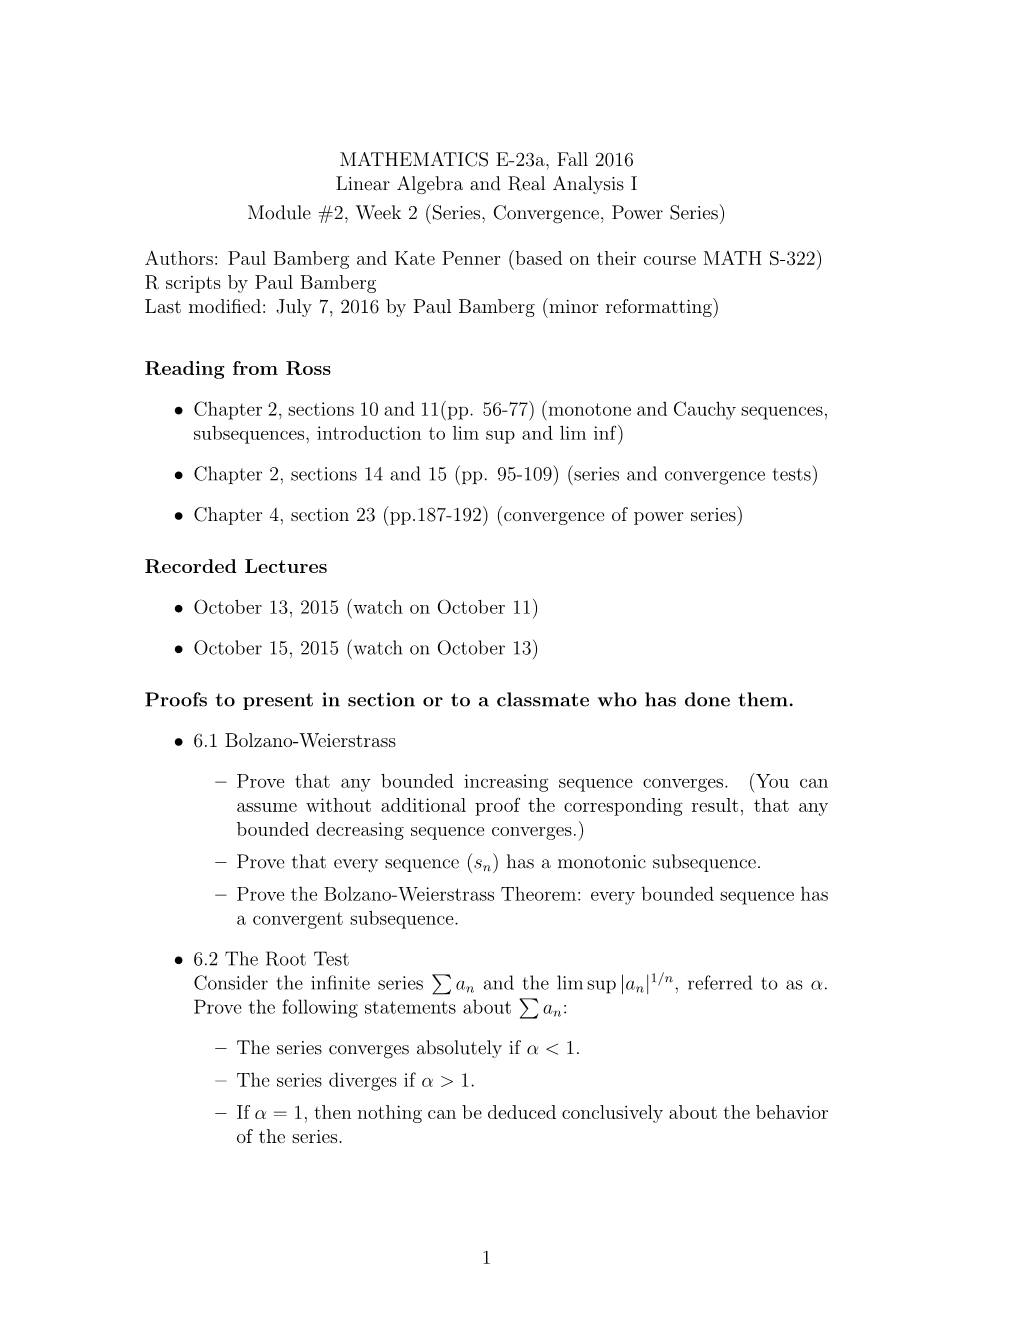 MATHEMATICS E-23A, Fall 2016 Linear Algebra and Real Analysis I Module #2, Week 2 (Series, Convergence, Power Series)